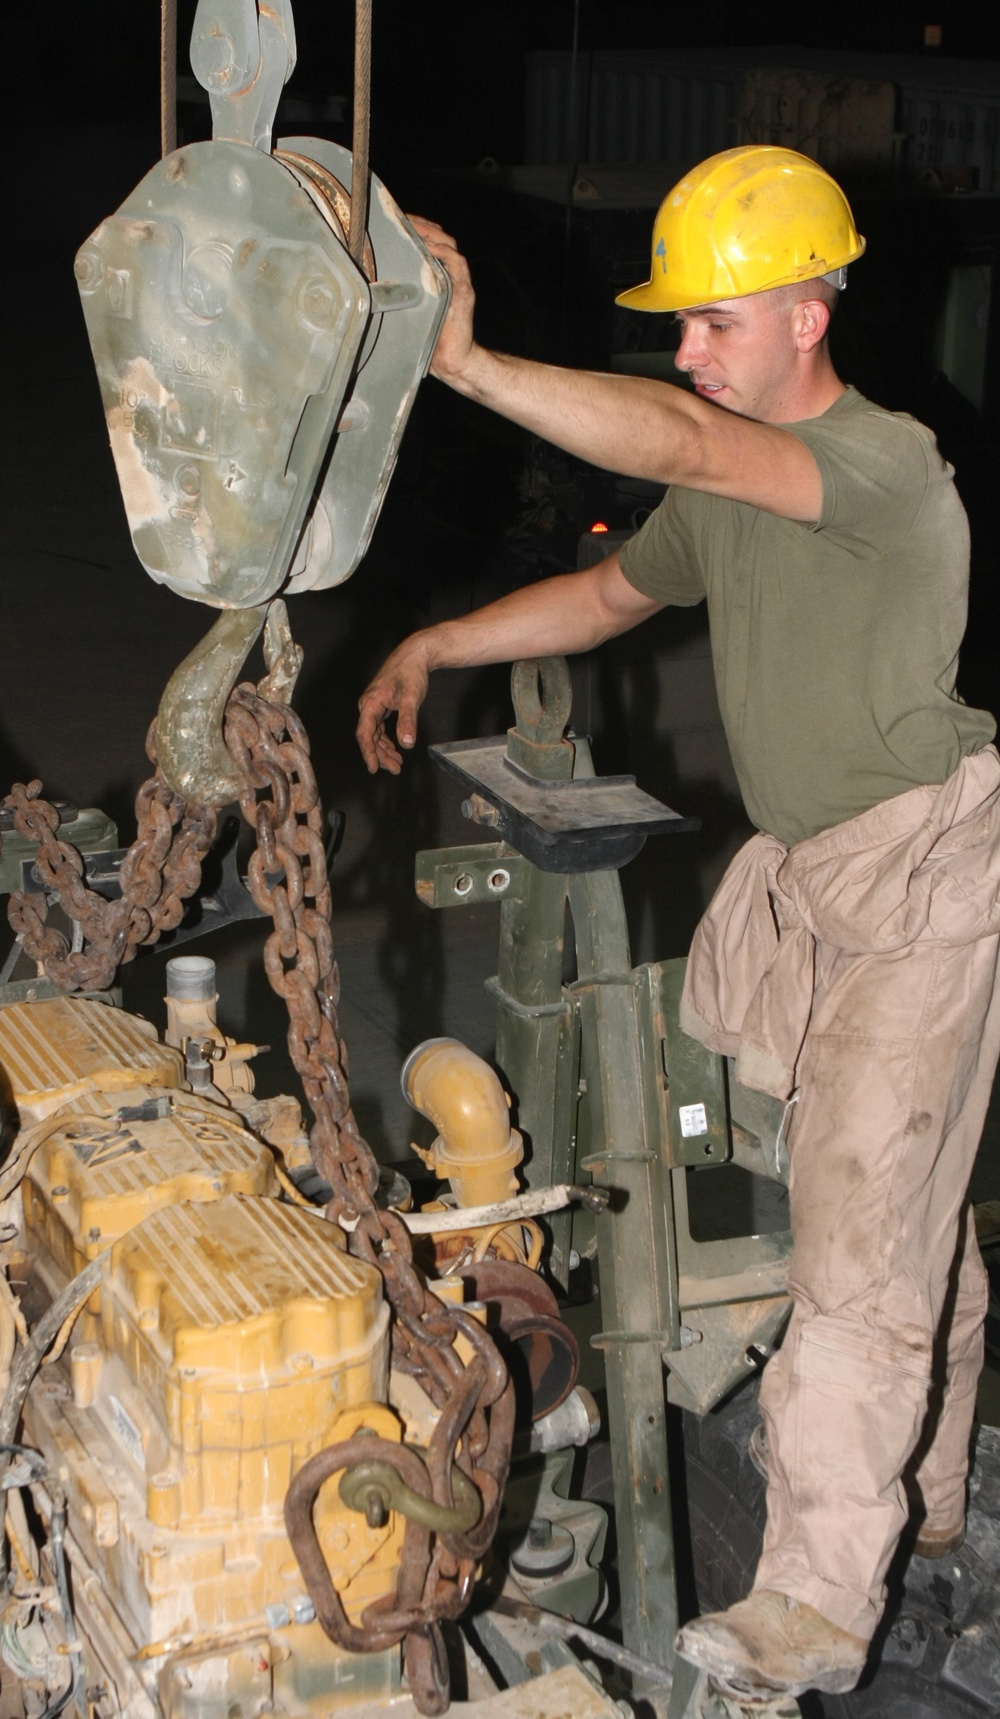 Combat Logistics Battalion 22 mechs keep Marine Expeditionary Unit rolling